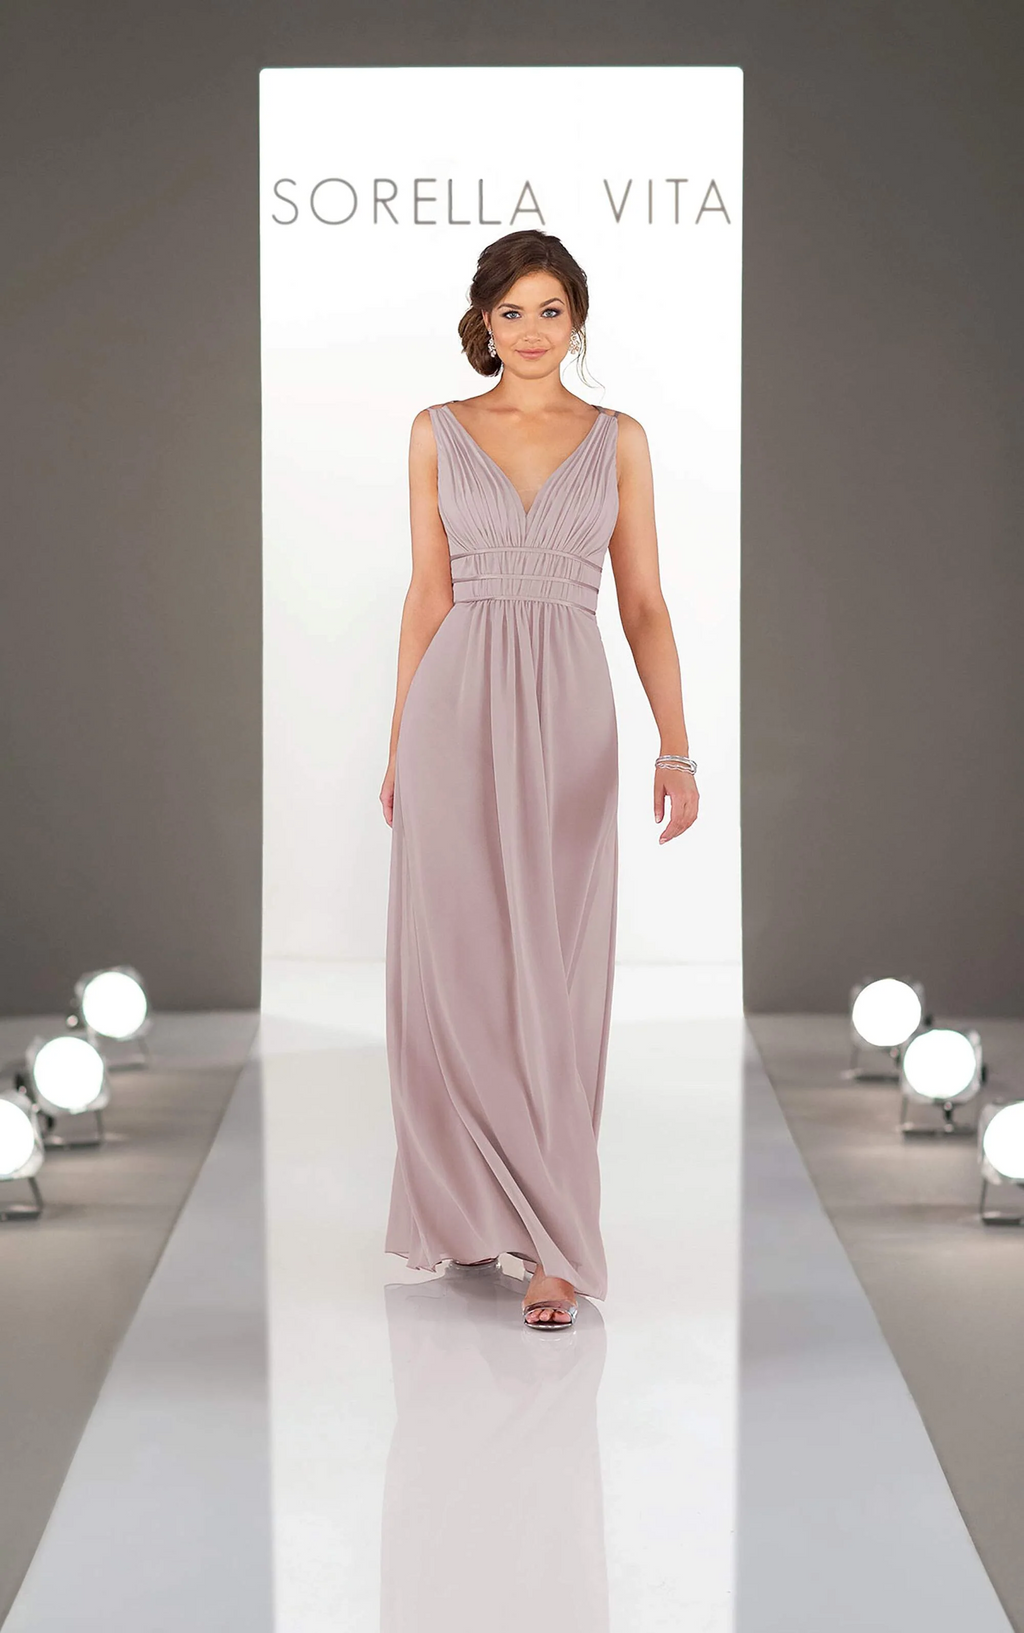 Sorella Vita Dress Style 9260  (Vintage Rose-Size 10) Prom, Ball., Black-tie, Bridesmaid, Pageant (Copy)